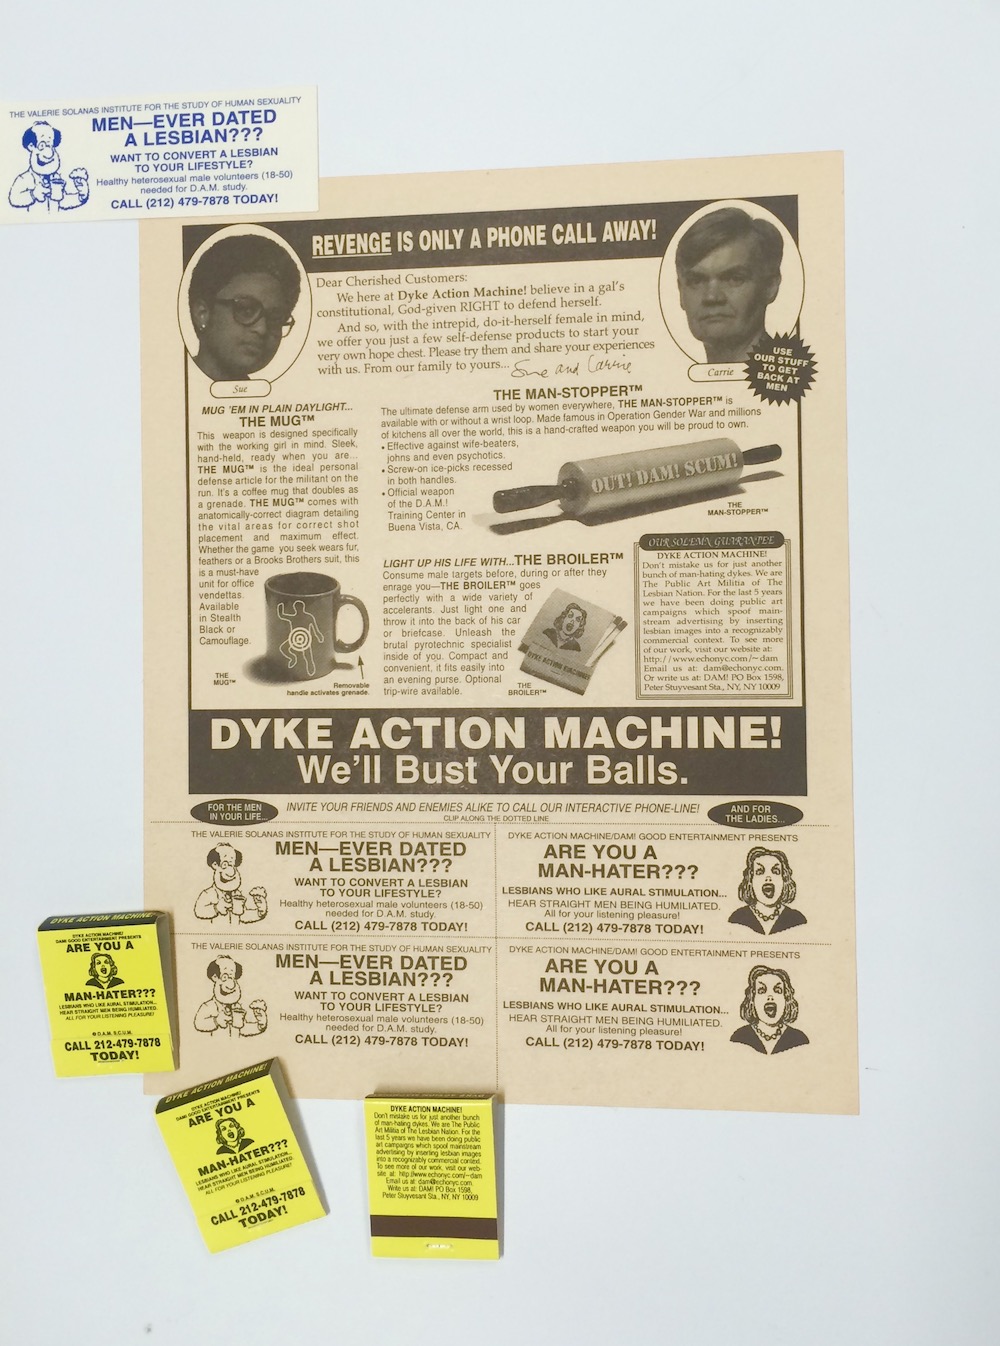  Dyke Action Machine, DAM SCUM, 1996. Courtesy of Dyke Action Machine! (Carrie Moyer and Sue Schaffner) 